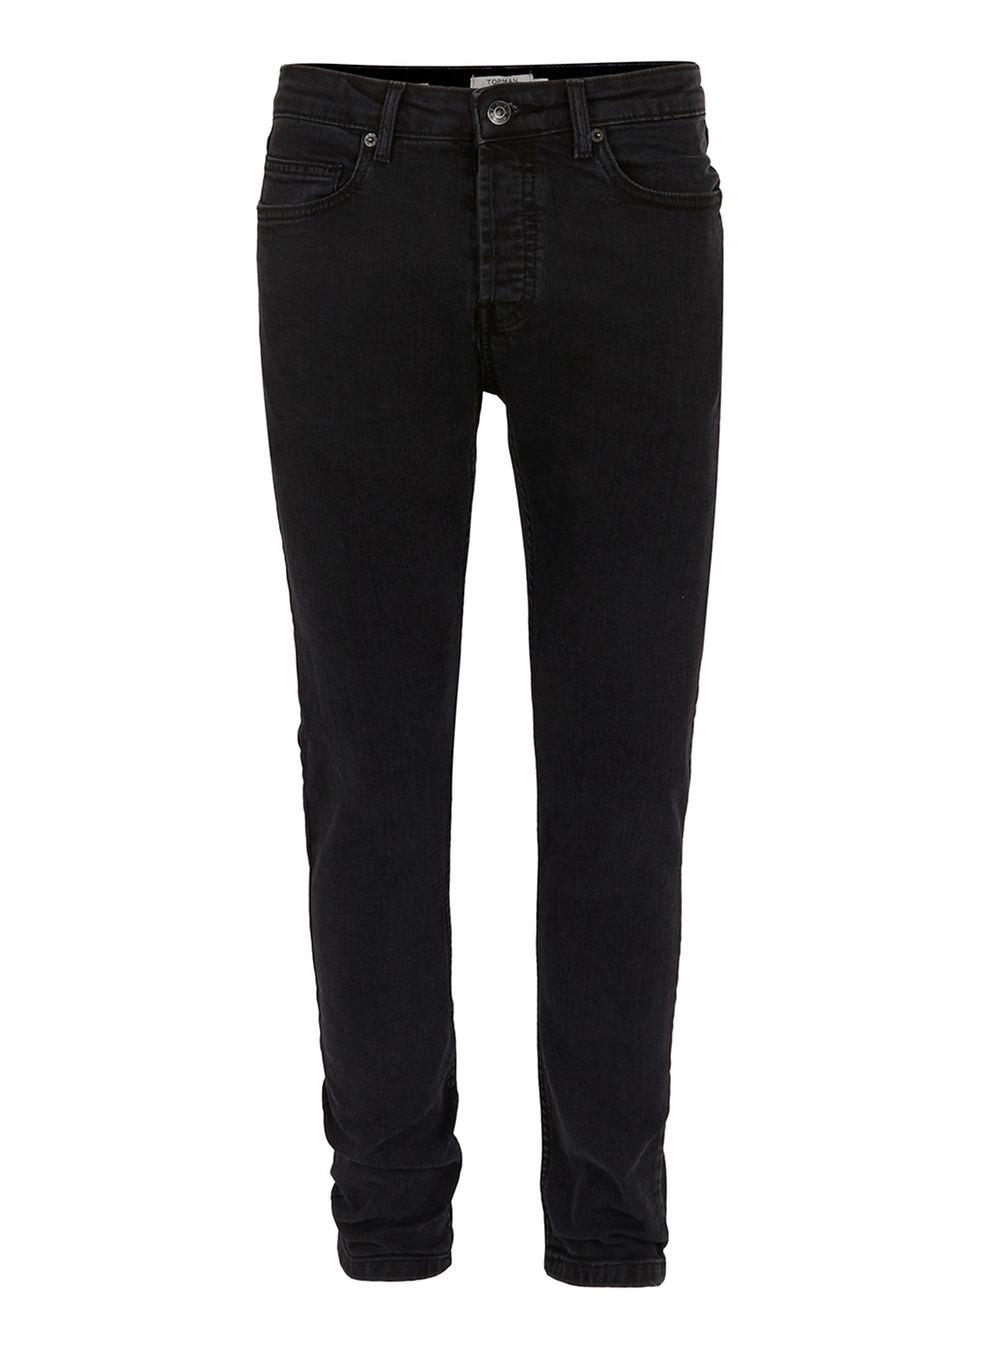 Topman Skinny Black Jeans